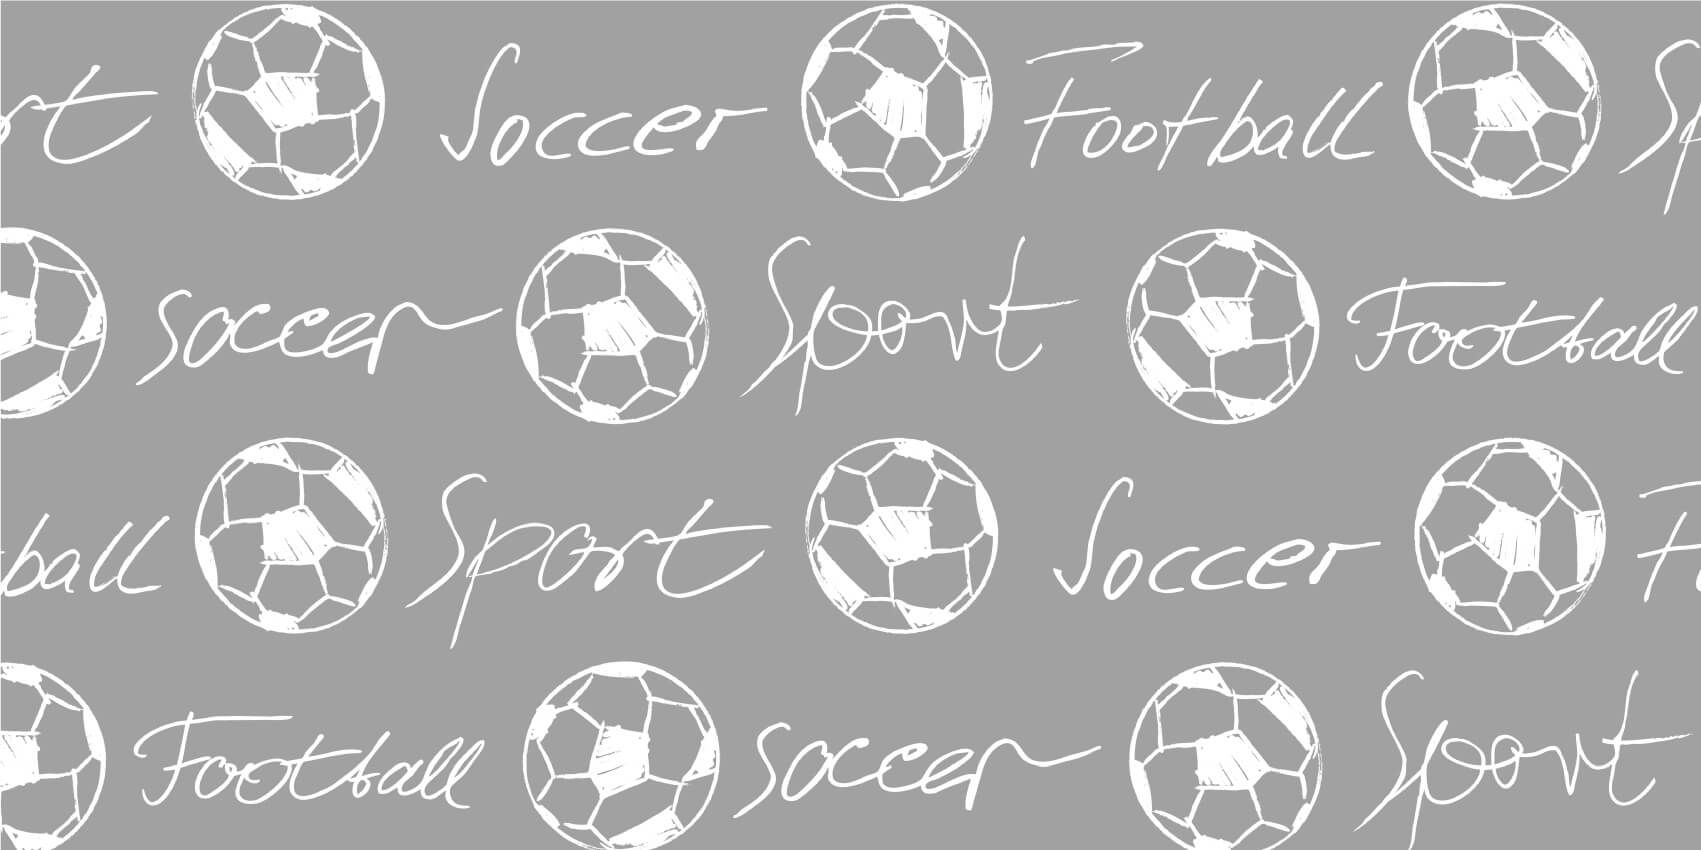 Soccer wallpaper - Footballs and text - Children's room